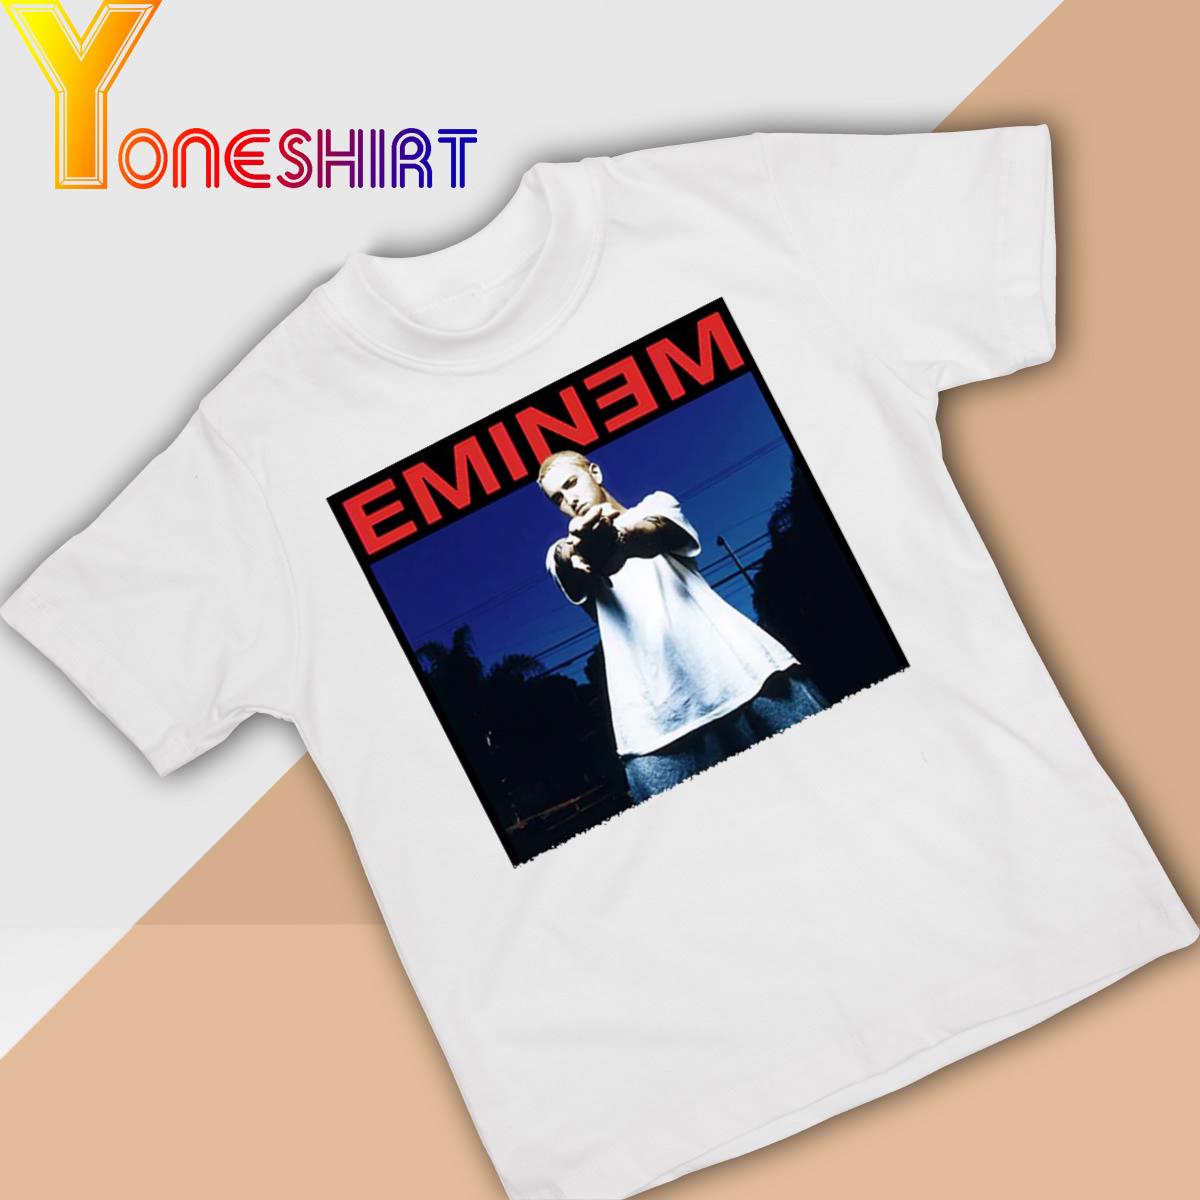 Official Powerline Eminem shirt